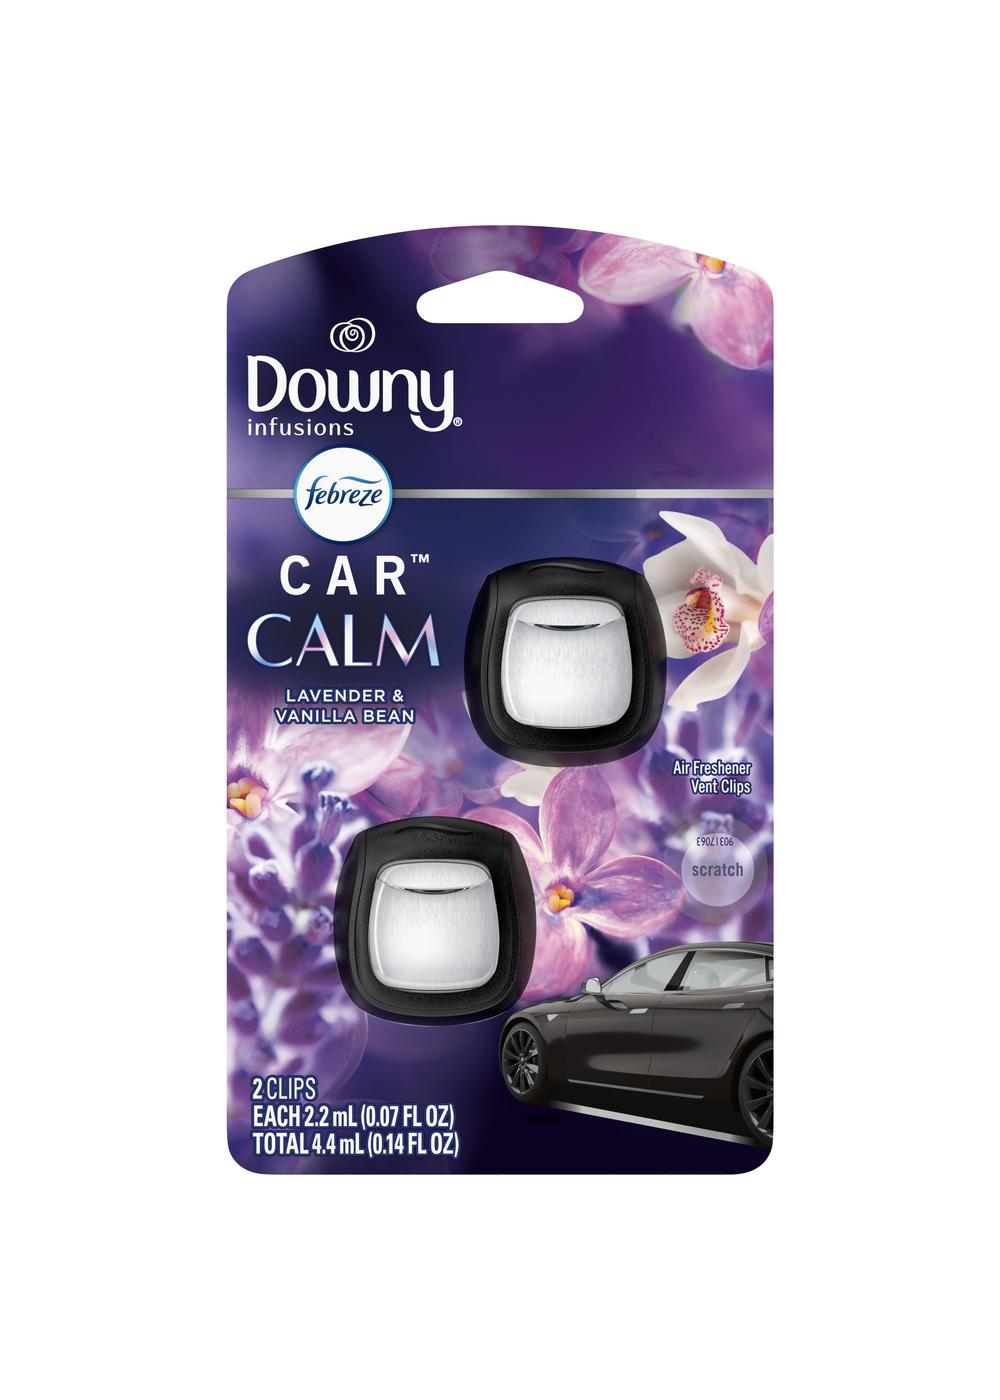 Febreze Car Vent Clip Air Freshener - Downy Calm Lavender & Vanilla Bean; image 1 of 2